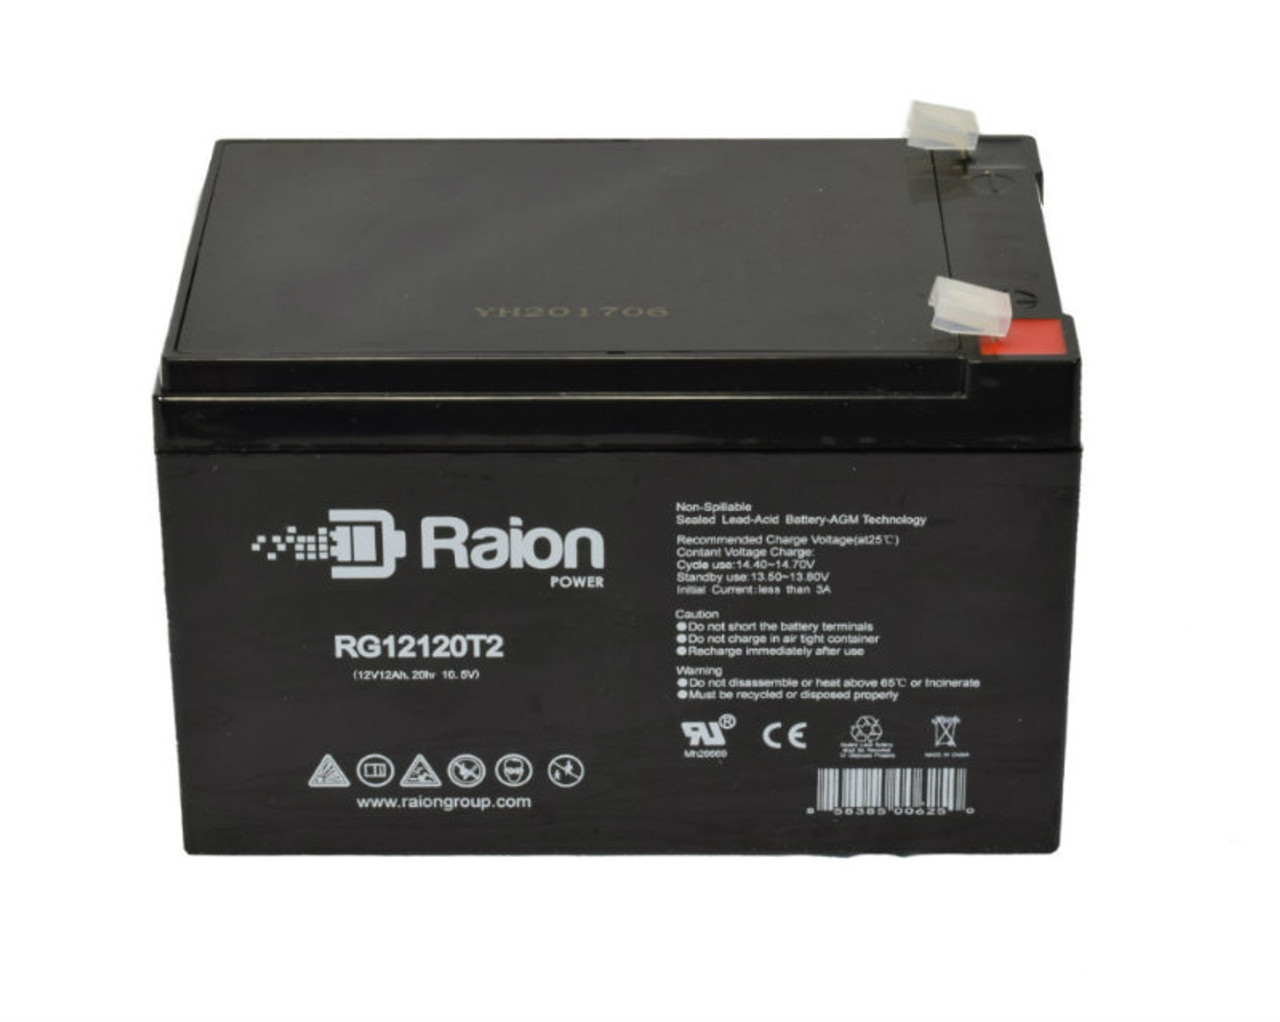 Raion Power RG12120T2 SLA Battery for X-Treme Sierra Trails